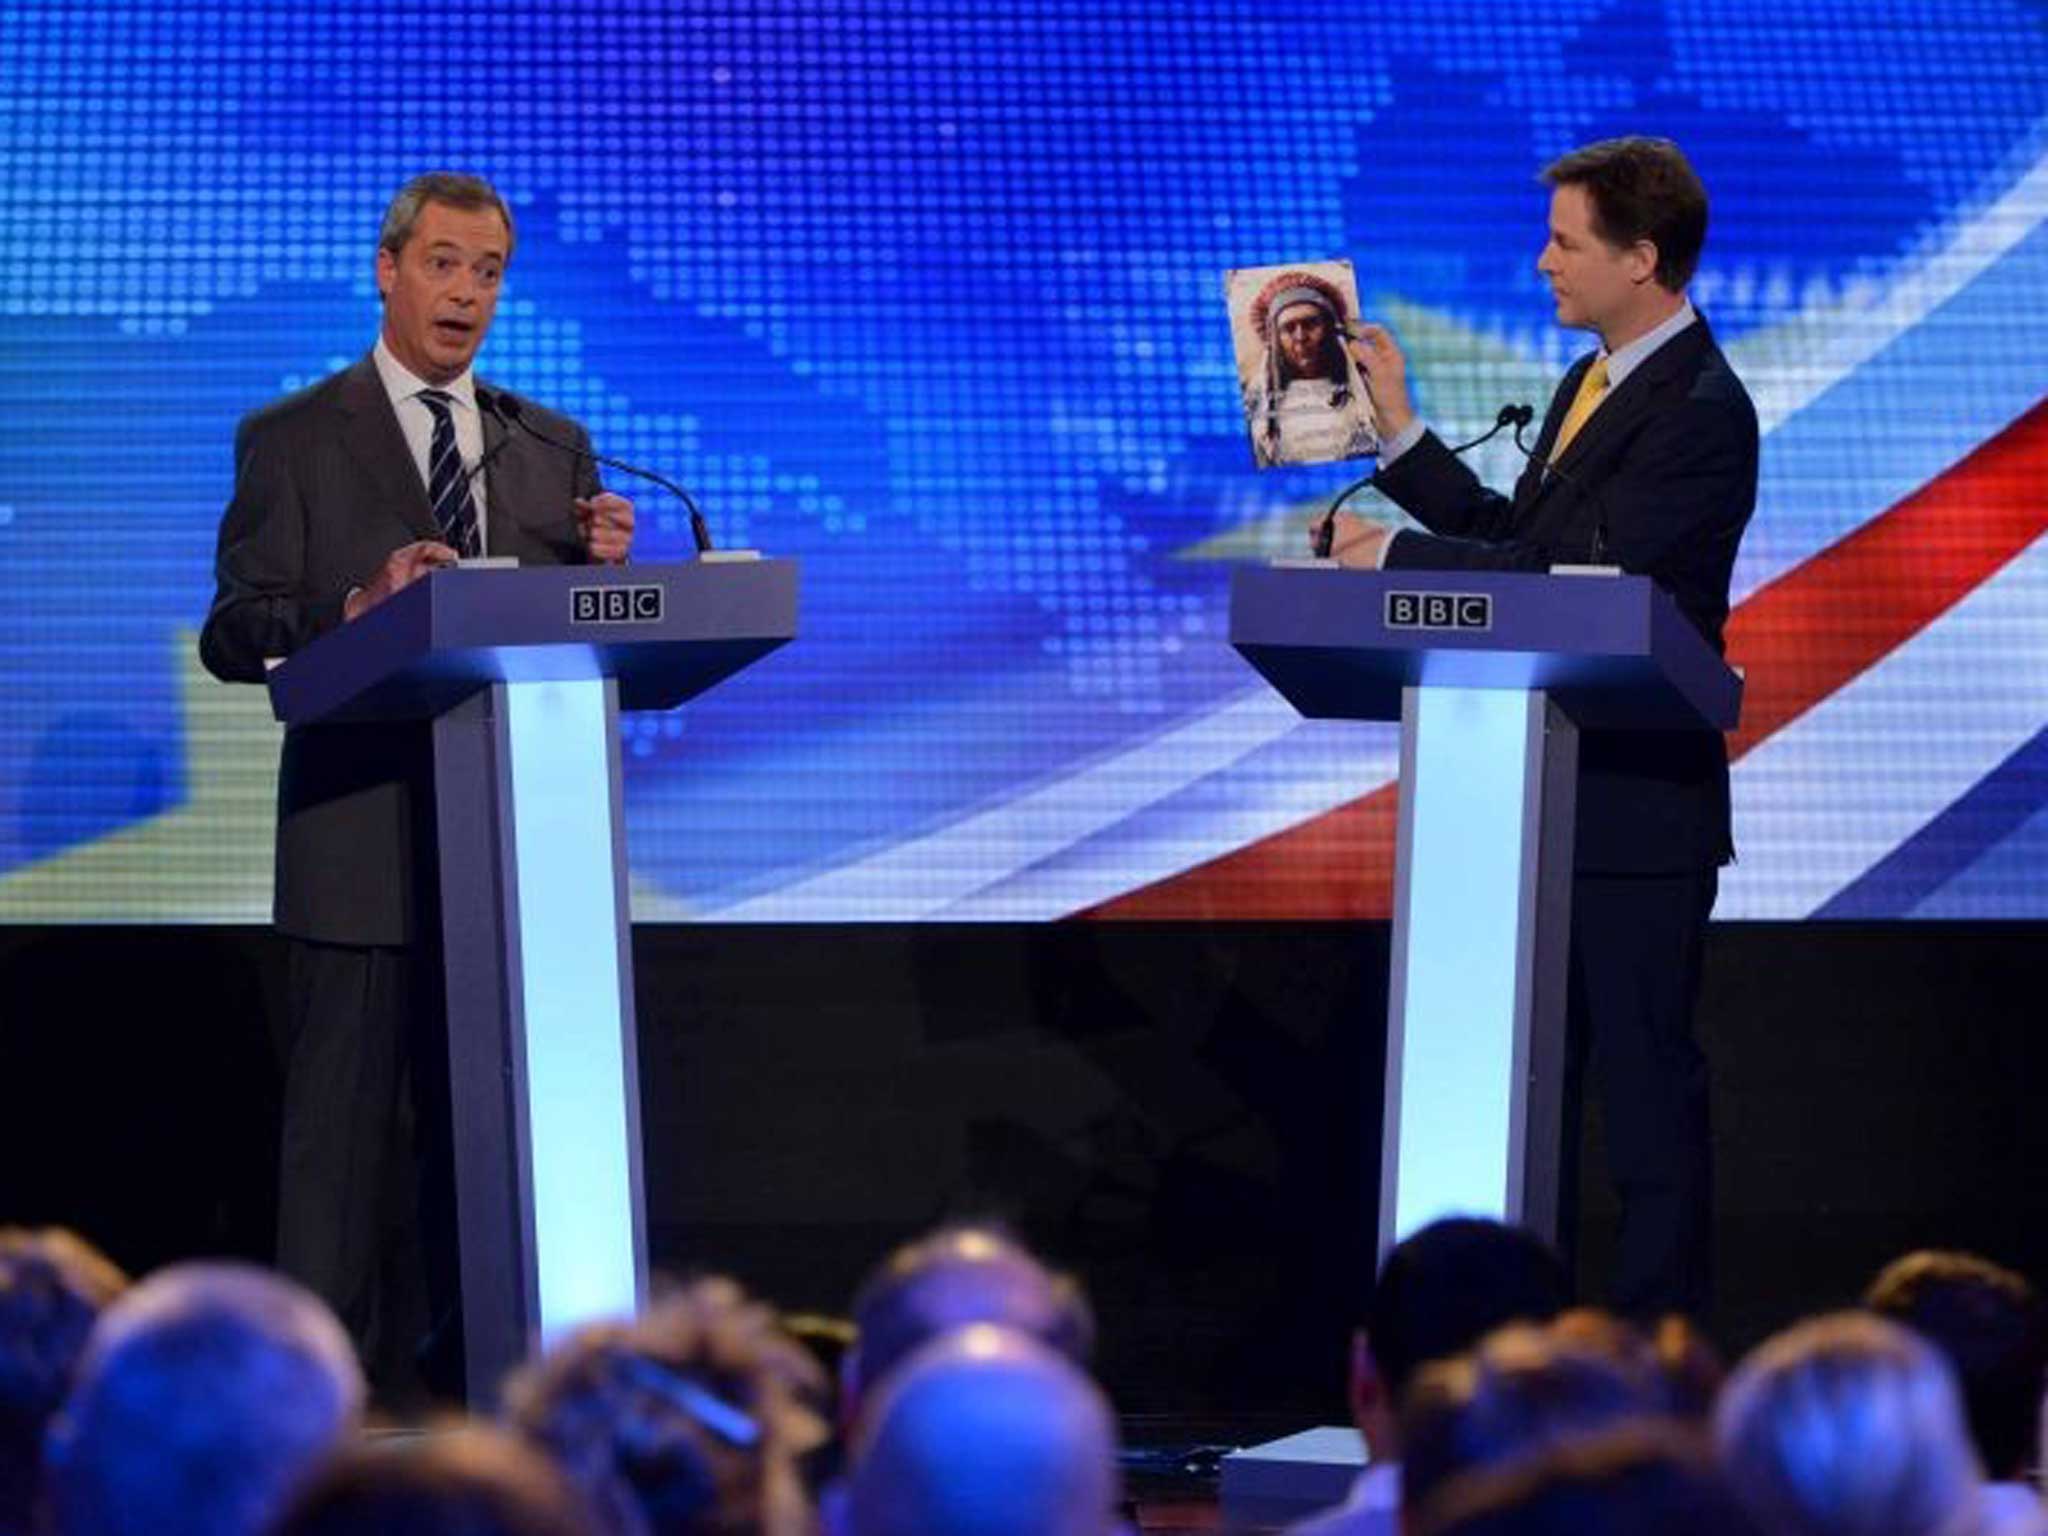 Nigel Farage (left) benefited from the EU debate against Nick Clegg